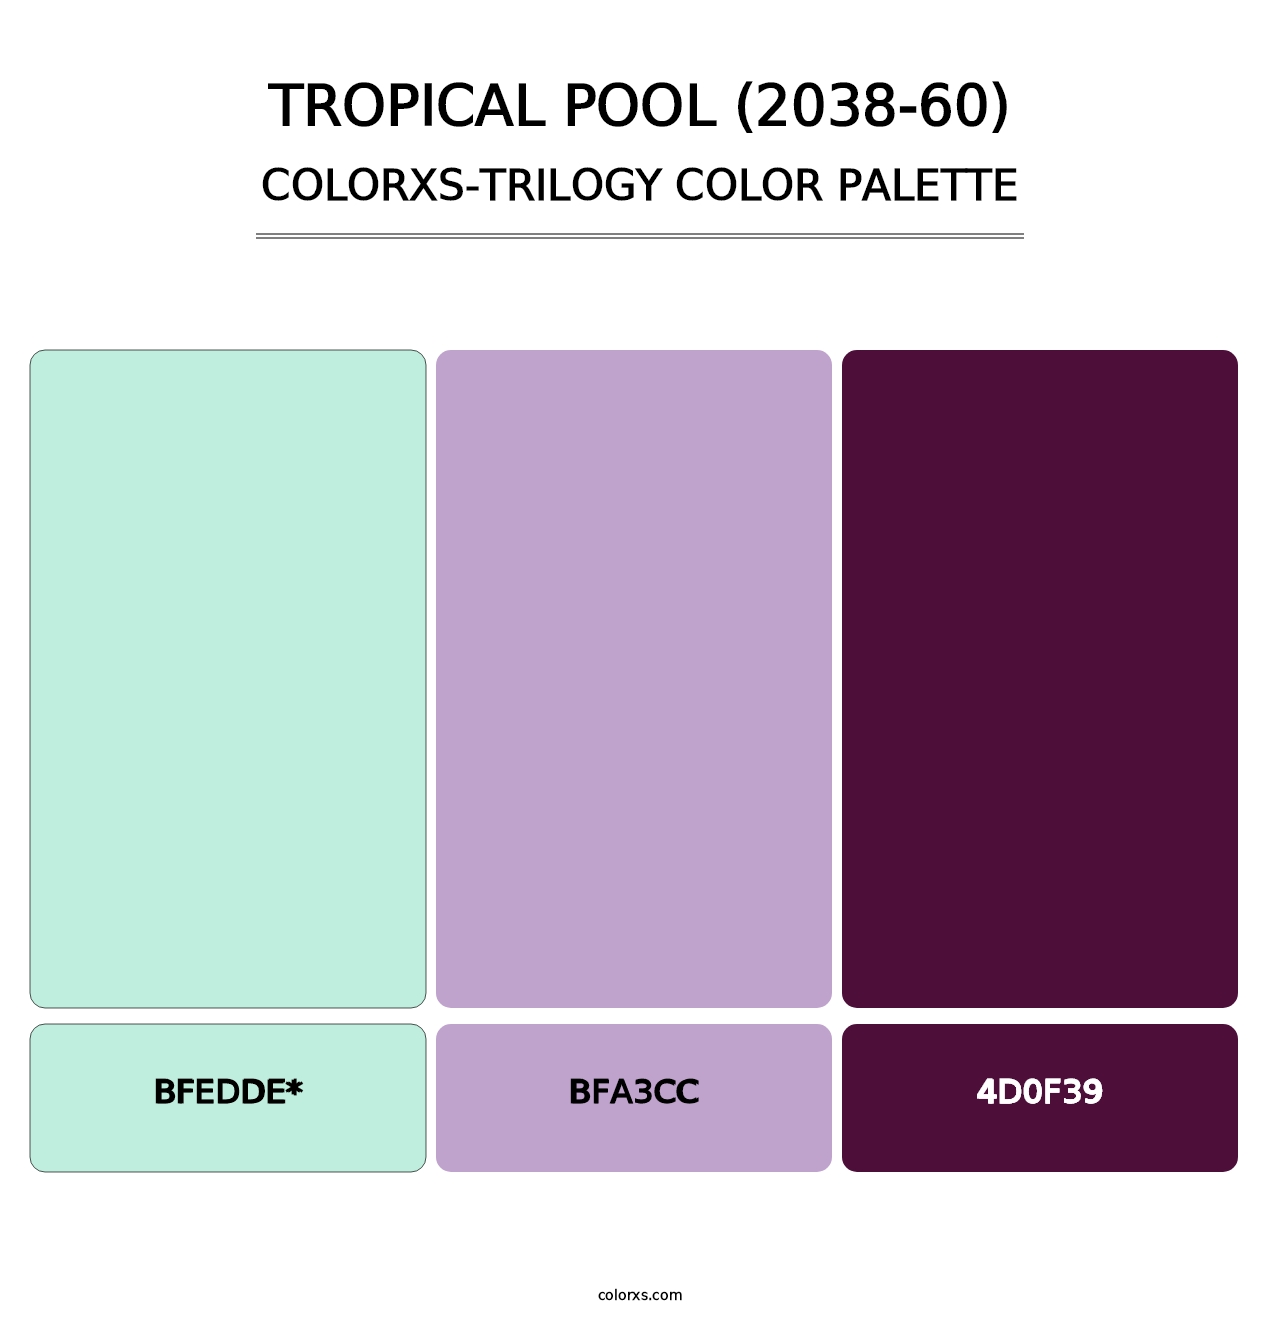 Tropical Pool (2038-60) - Colorxs Trilogy Palette